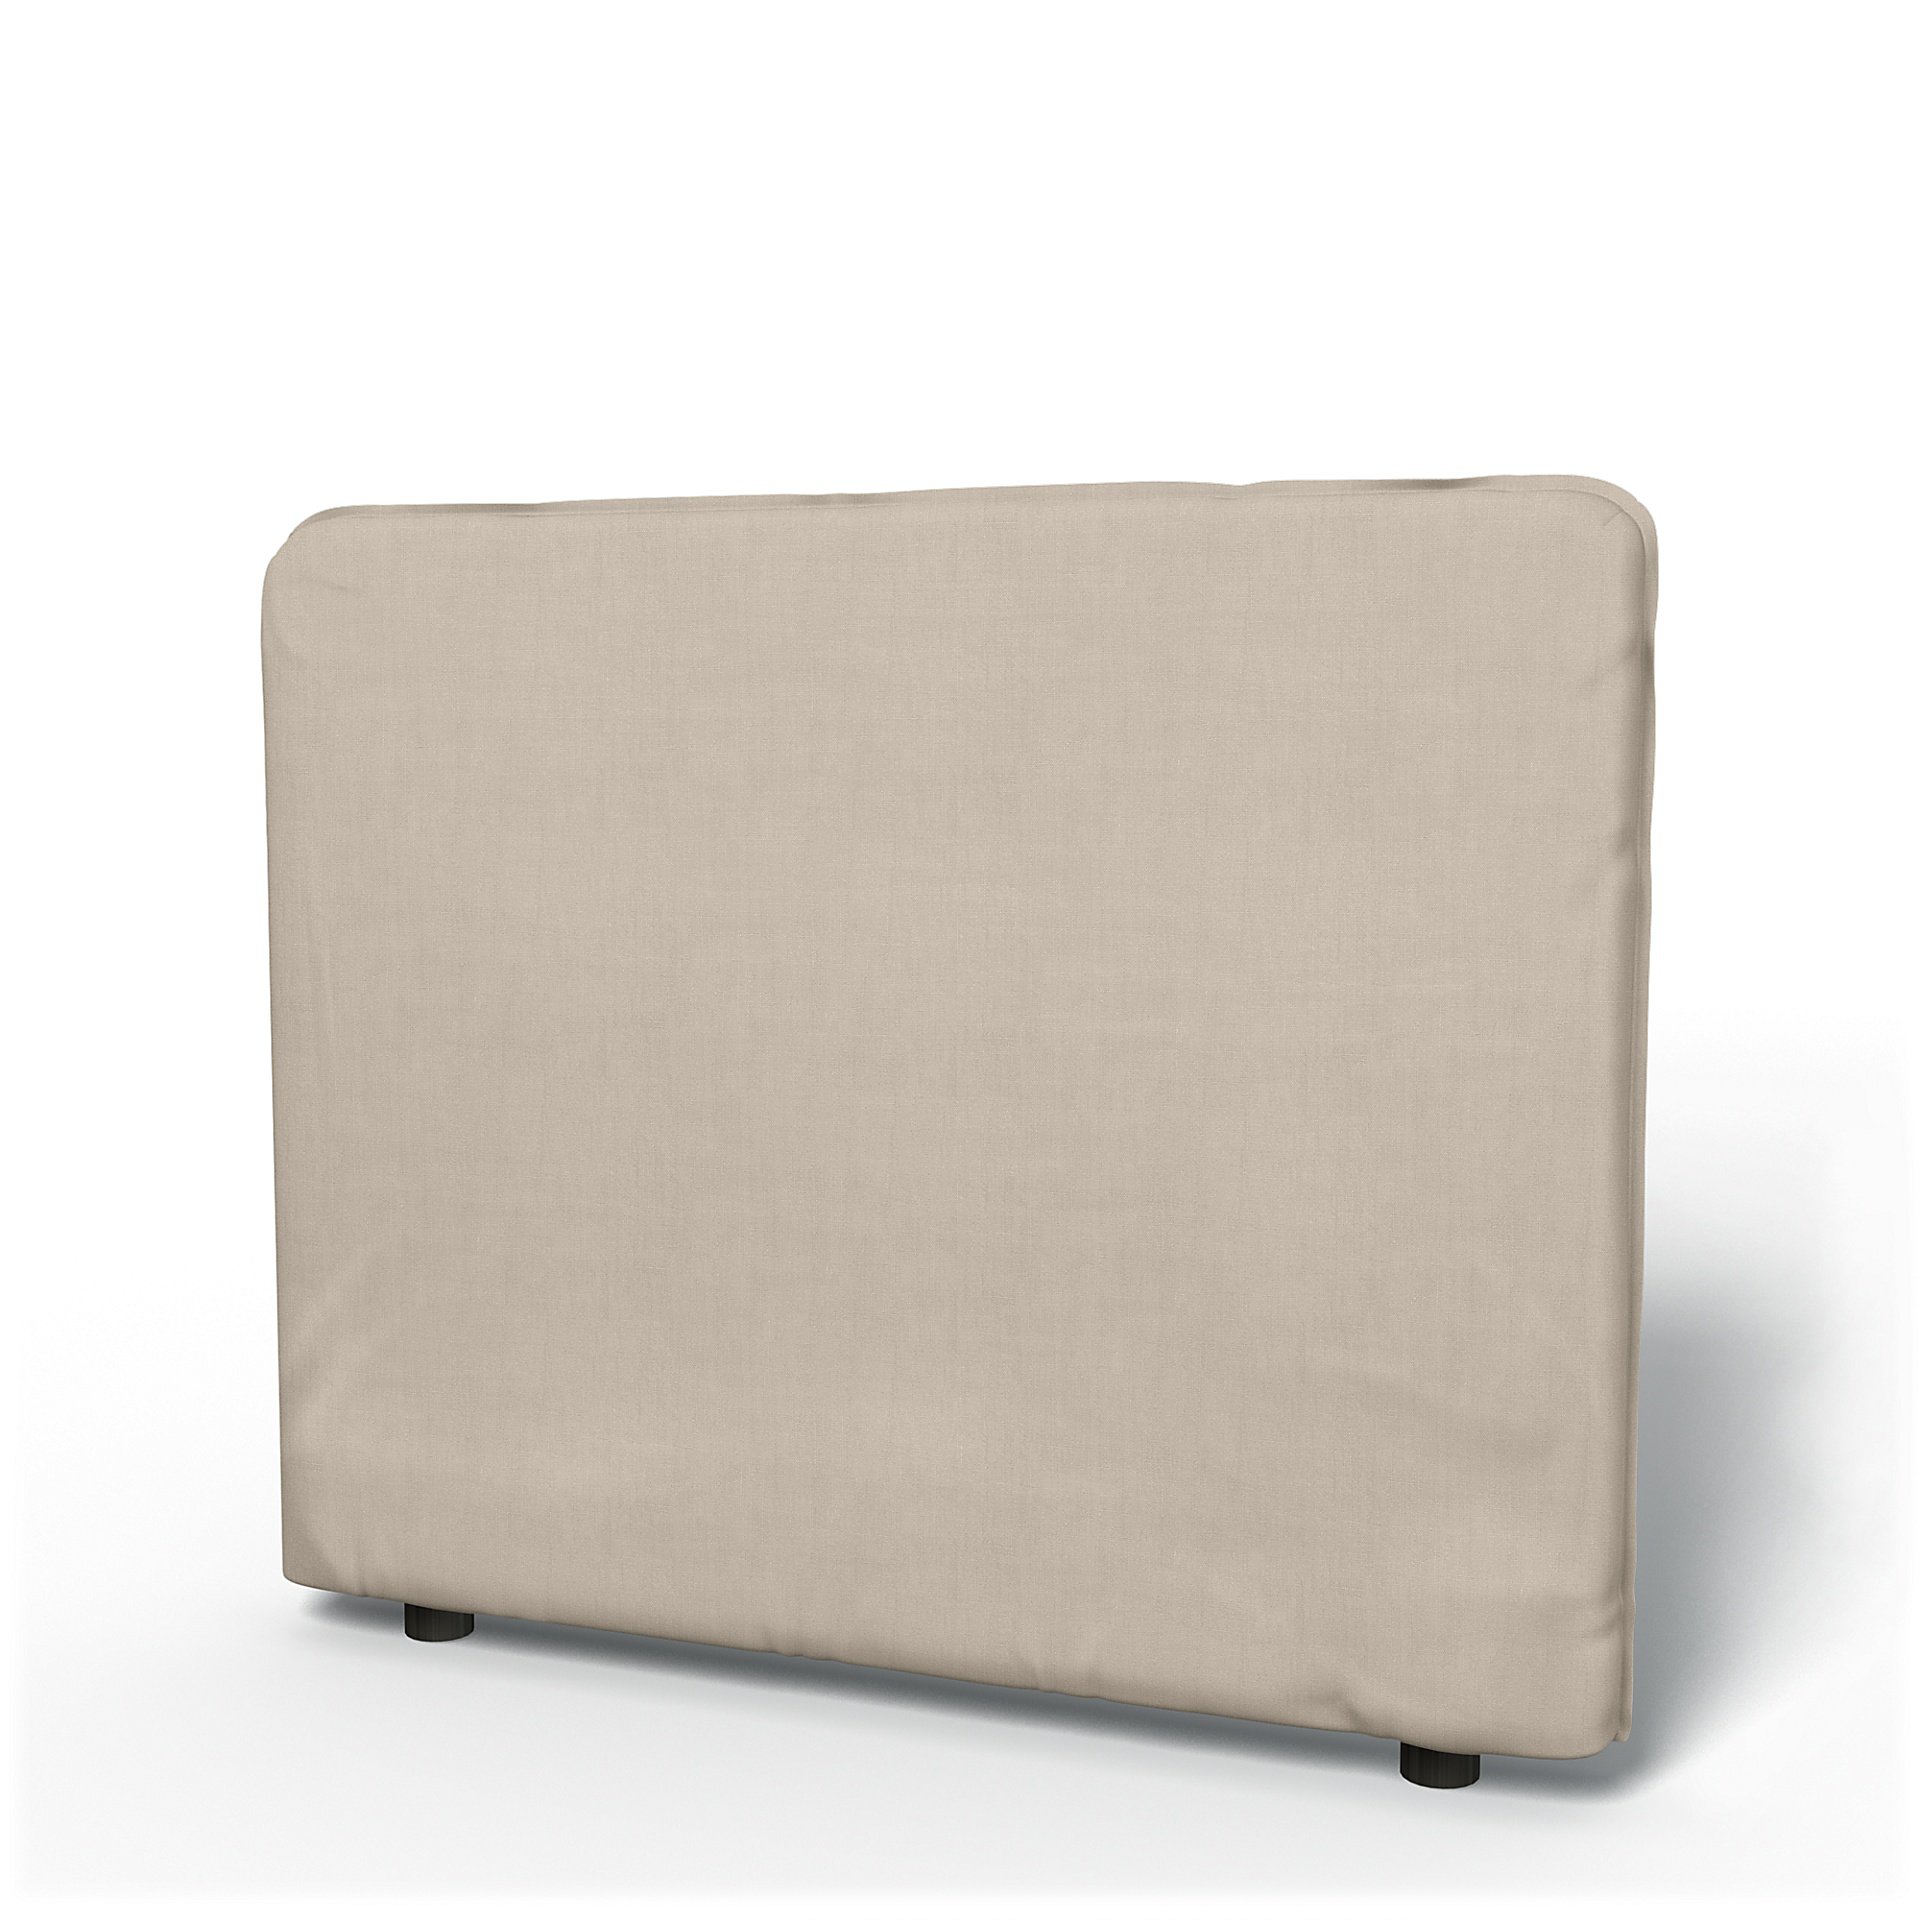 IKEA - Vallentuna Low Backrest Cover 100x80cm 39x32in, Parchment, Linen - Bemz